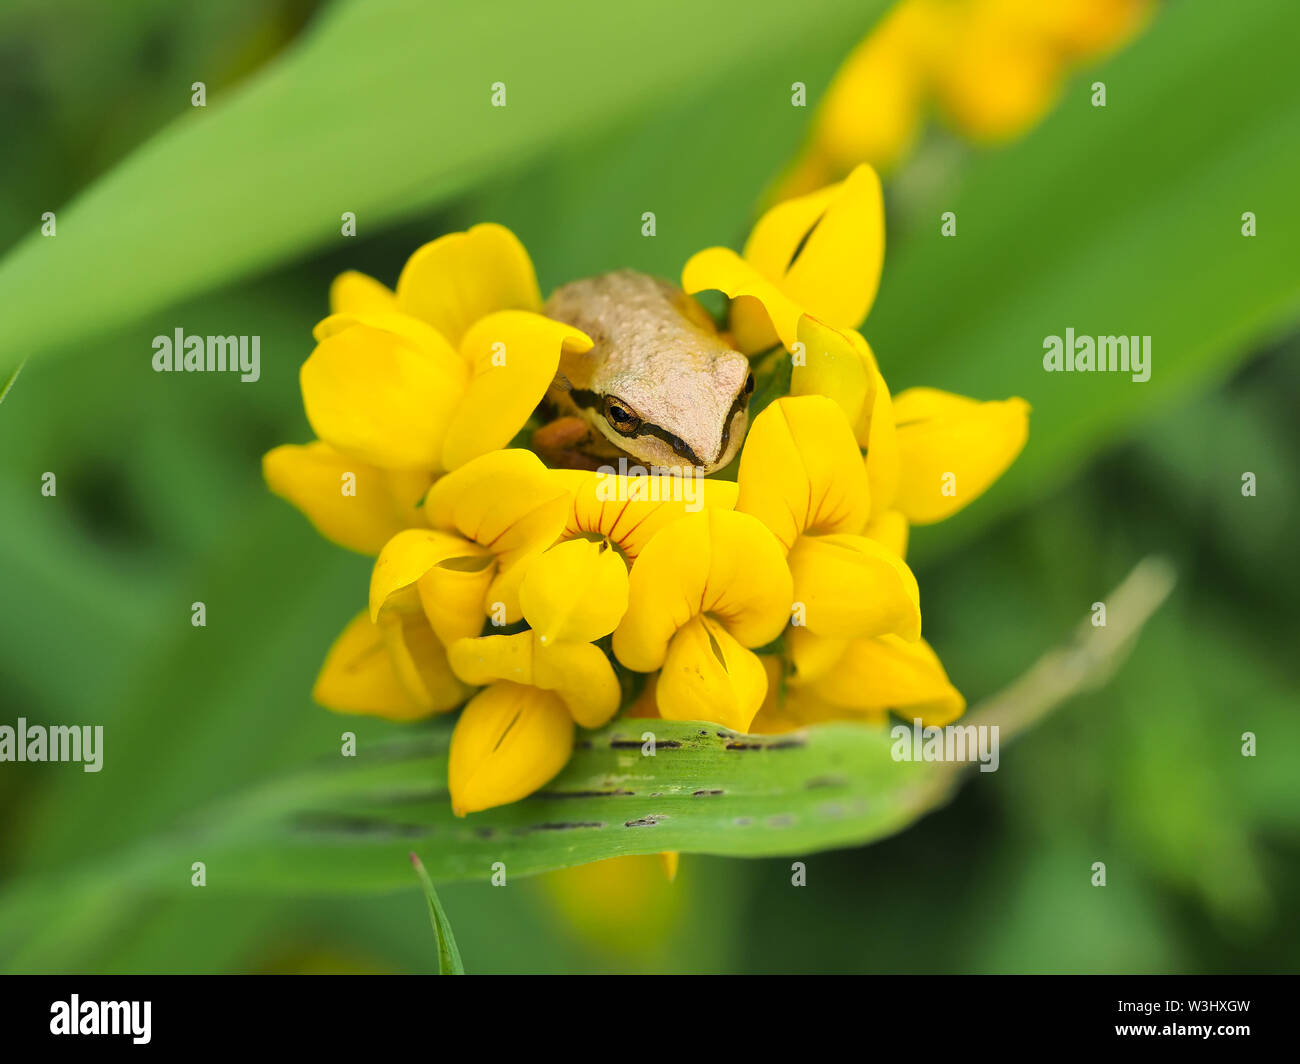 Tiny Pacific tree frog (Pseudacris regilla) sitting in a flower Stock Photo